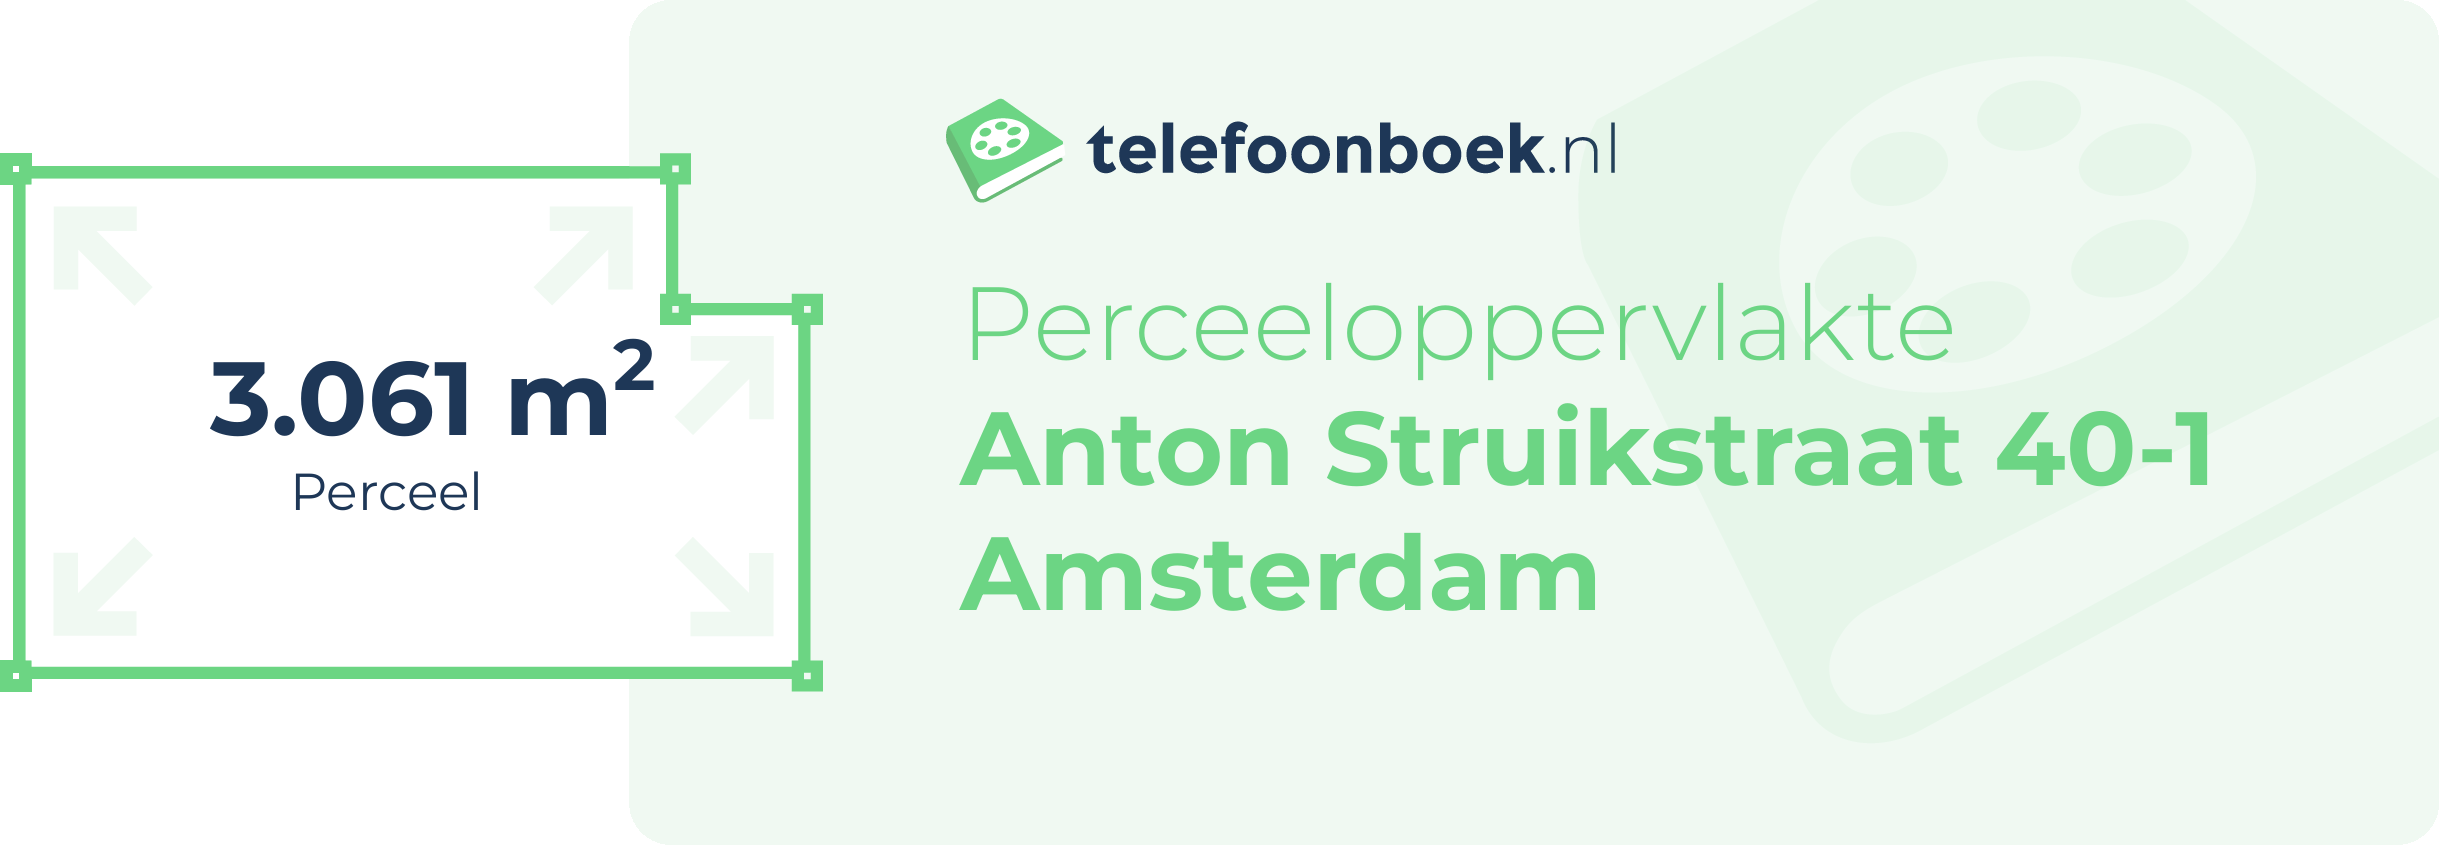 Perceeloppervlakte Anton Struikstraat 40-1 Amsterdam